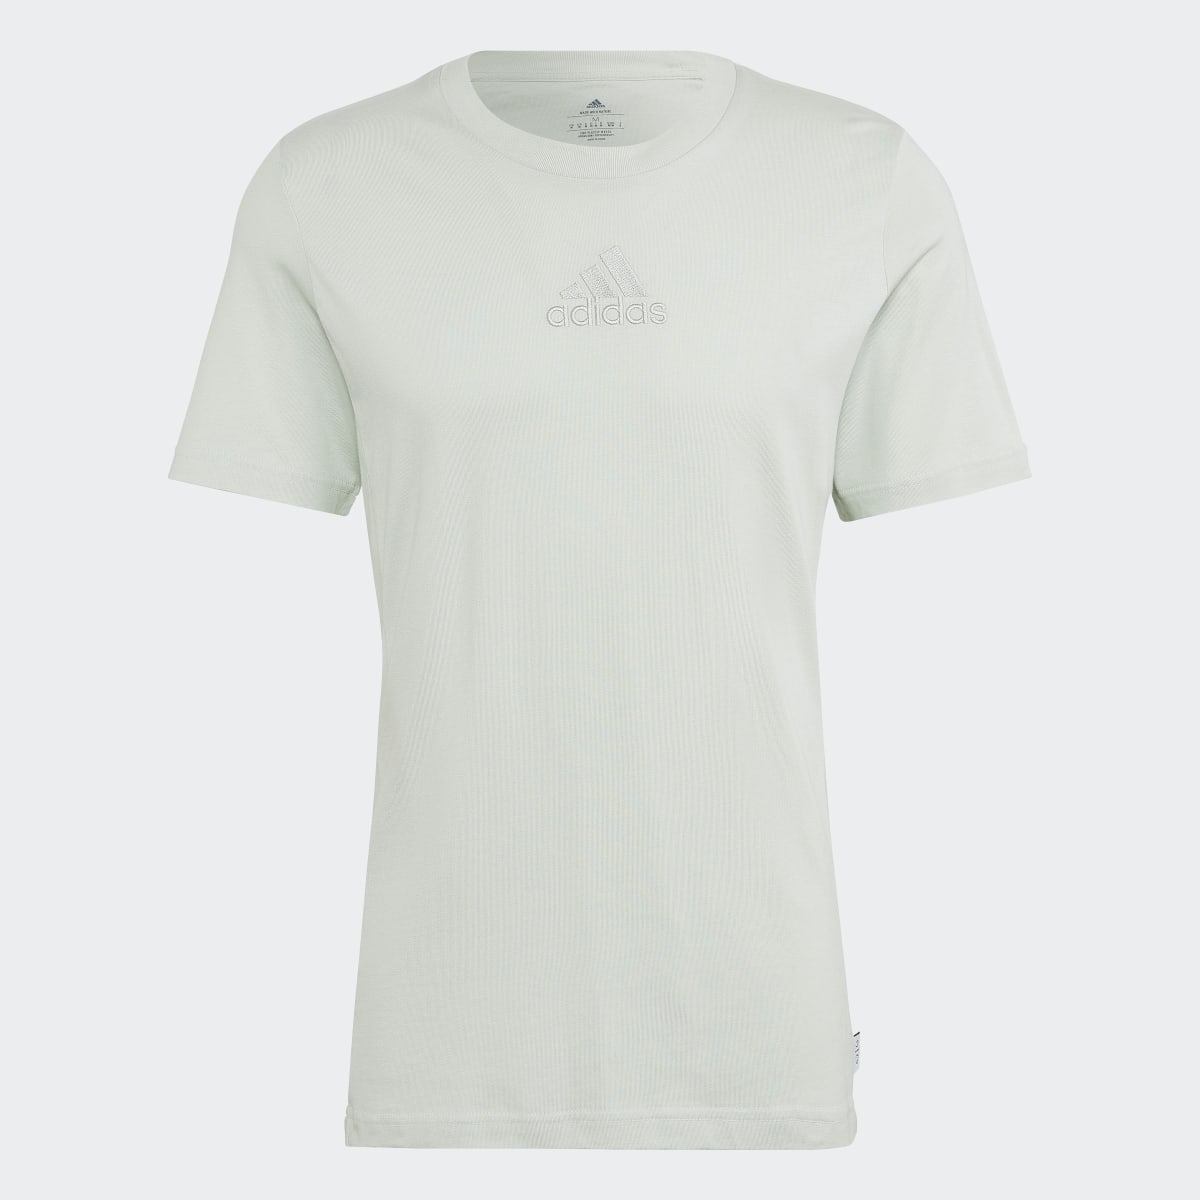 Adidas Studio Lounge T-Shirt. 5